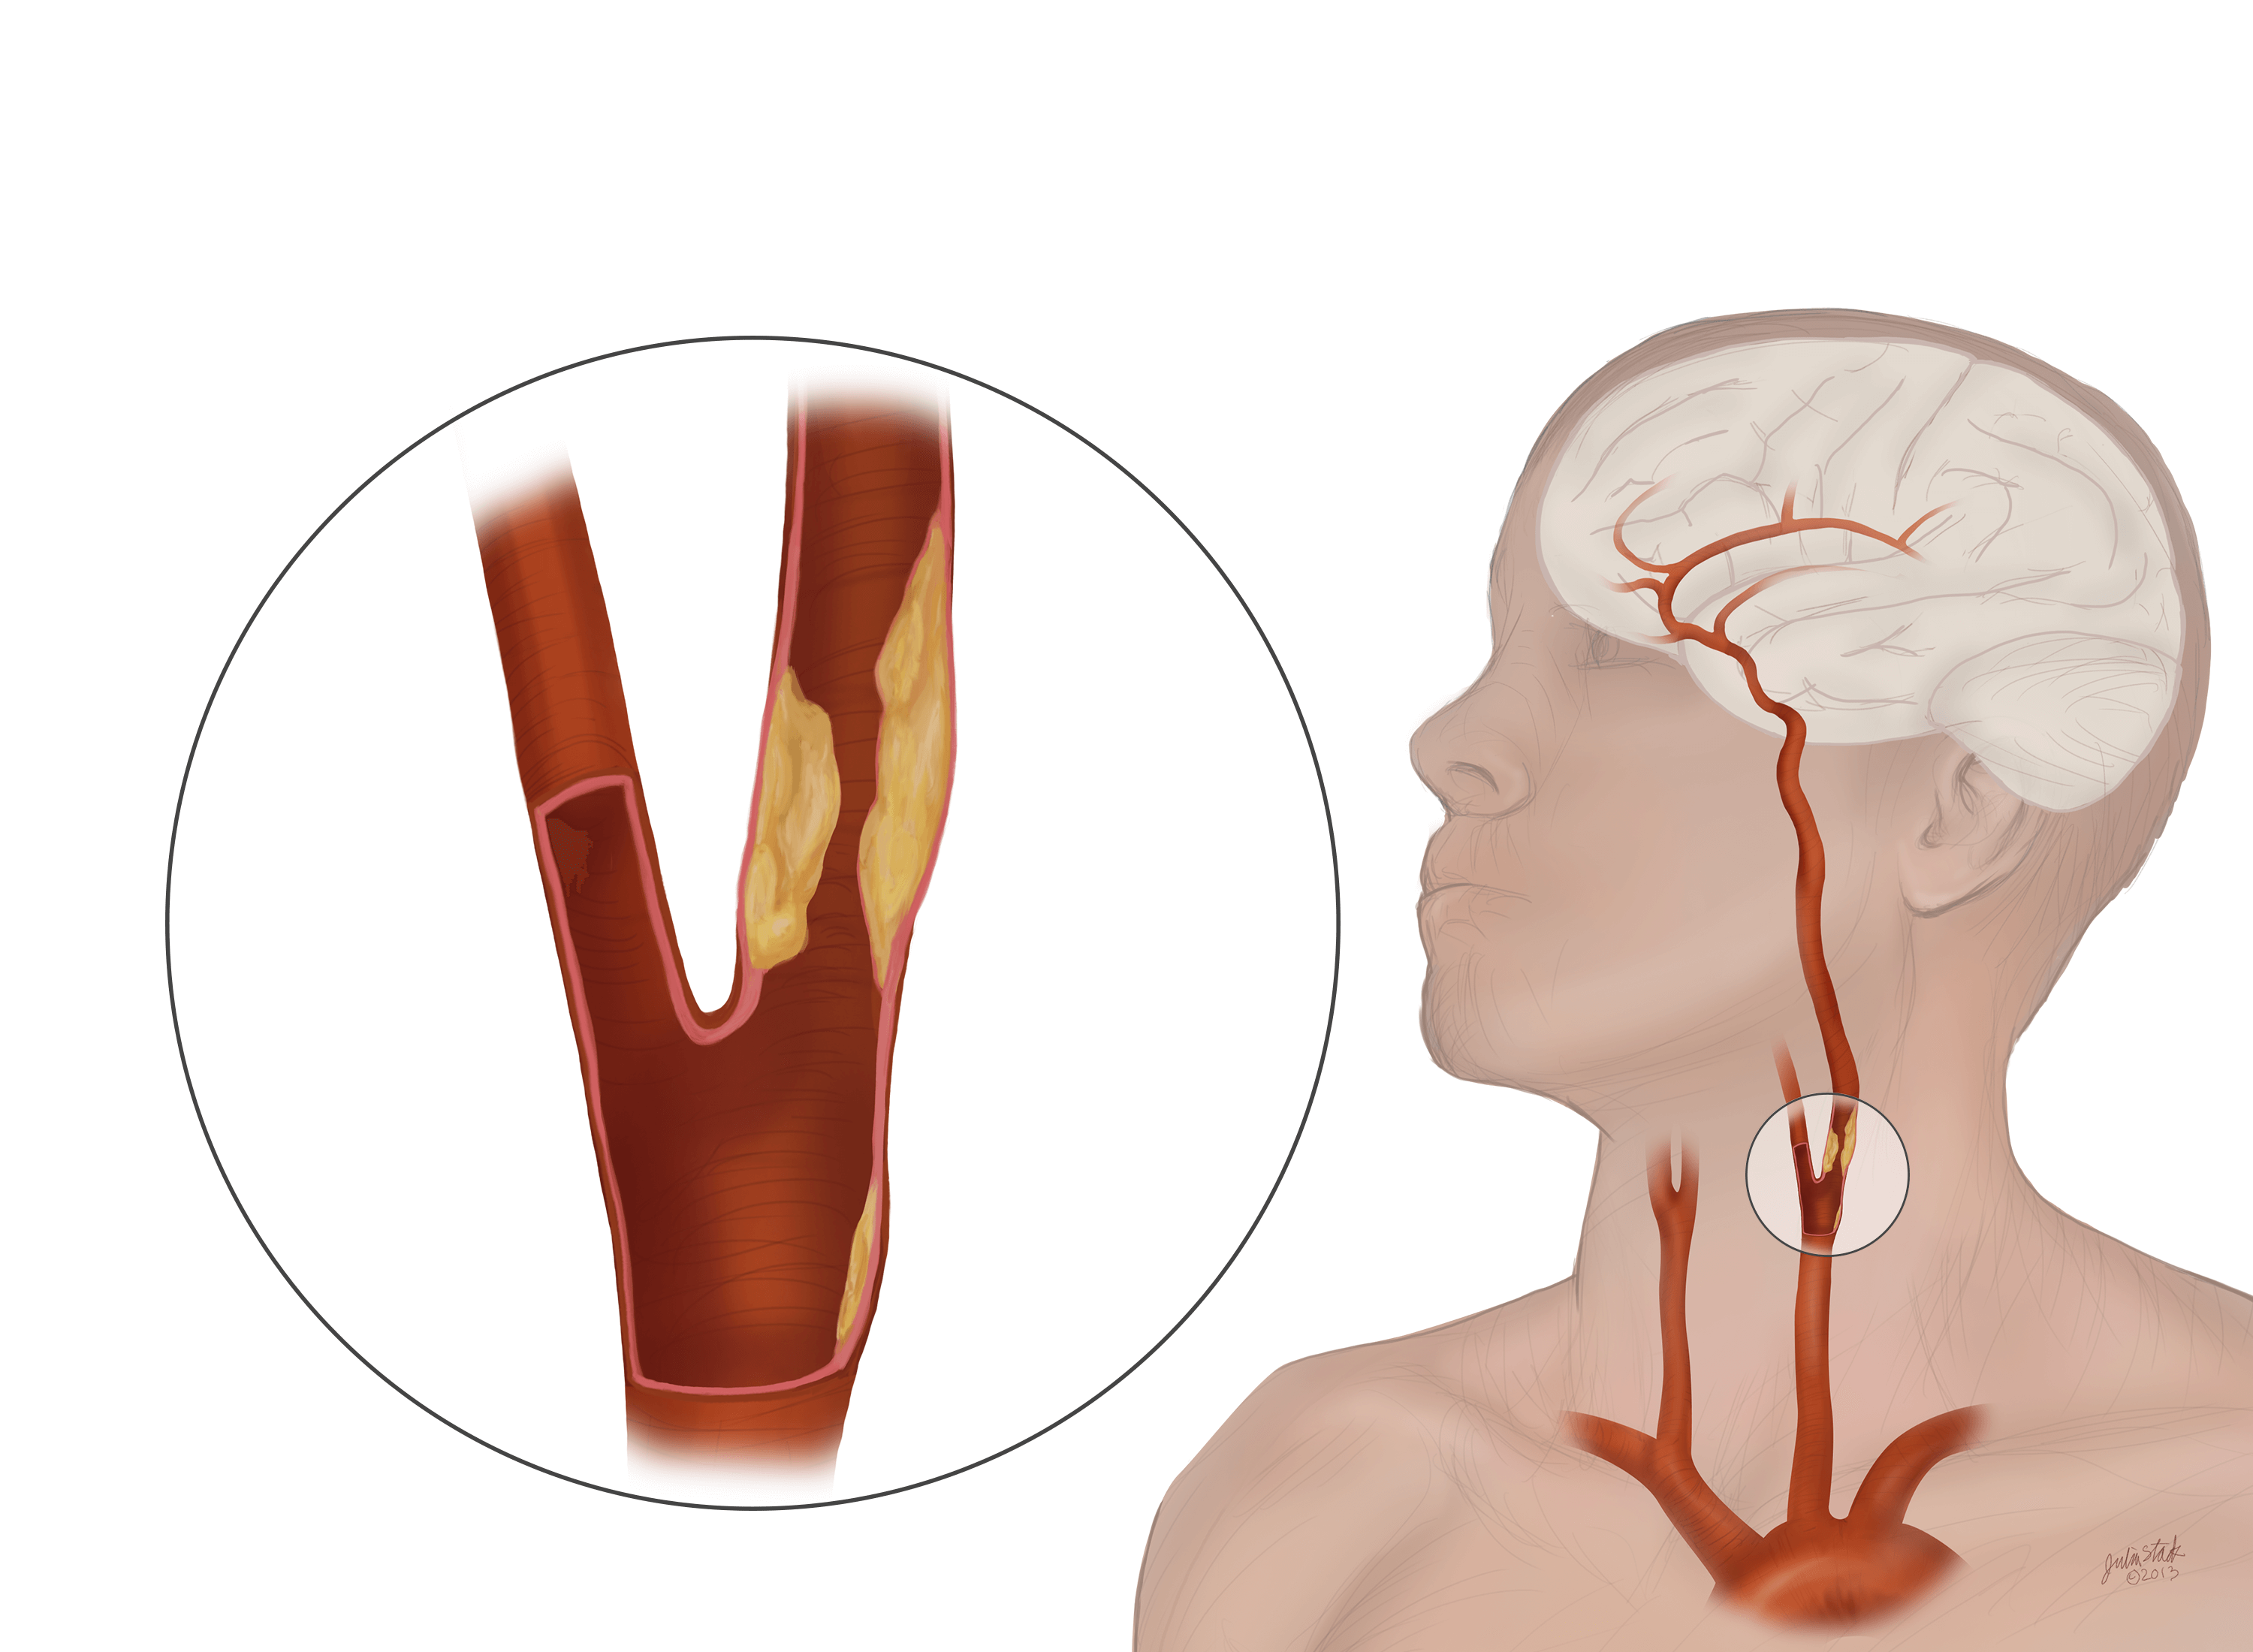 Boala arterei carotide